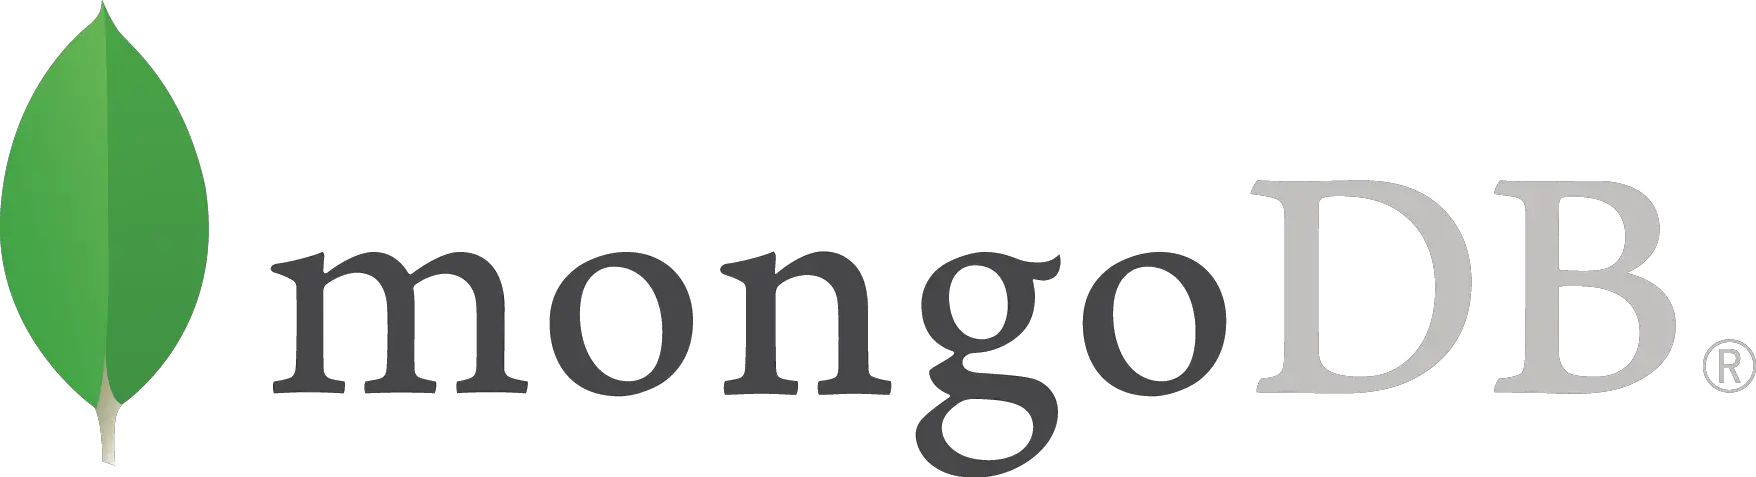 SQL vs NoSQL MongoDB log -- image from https://mongodb.com